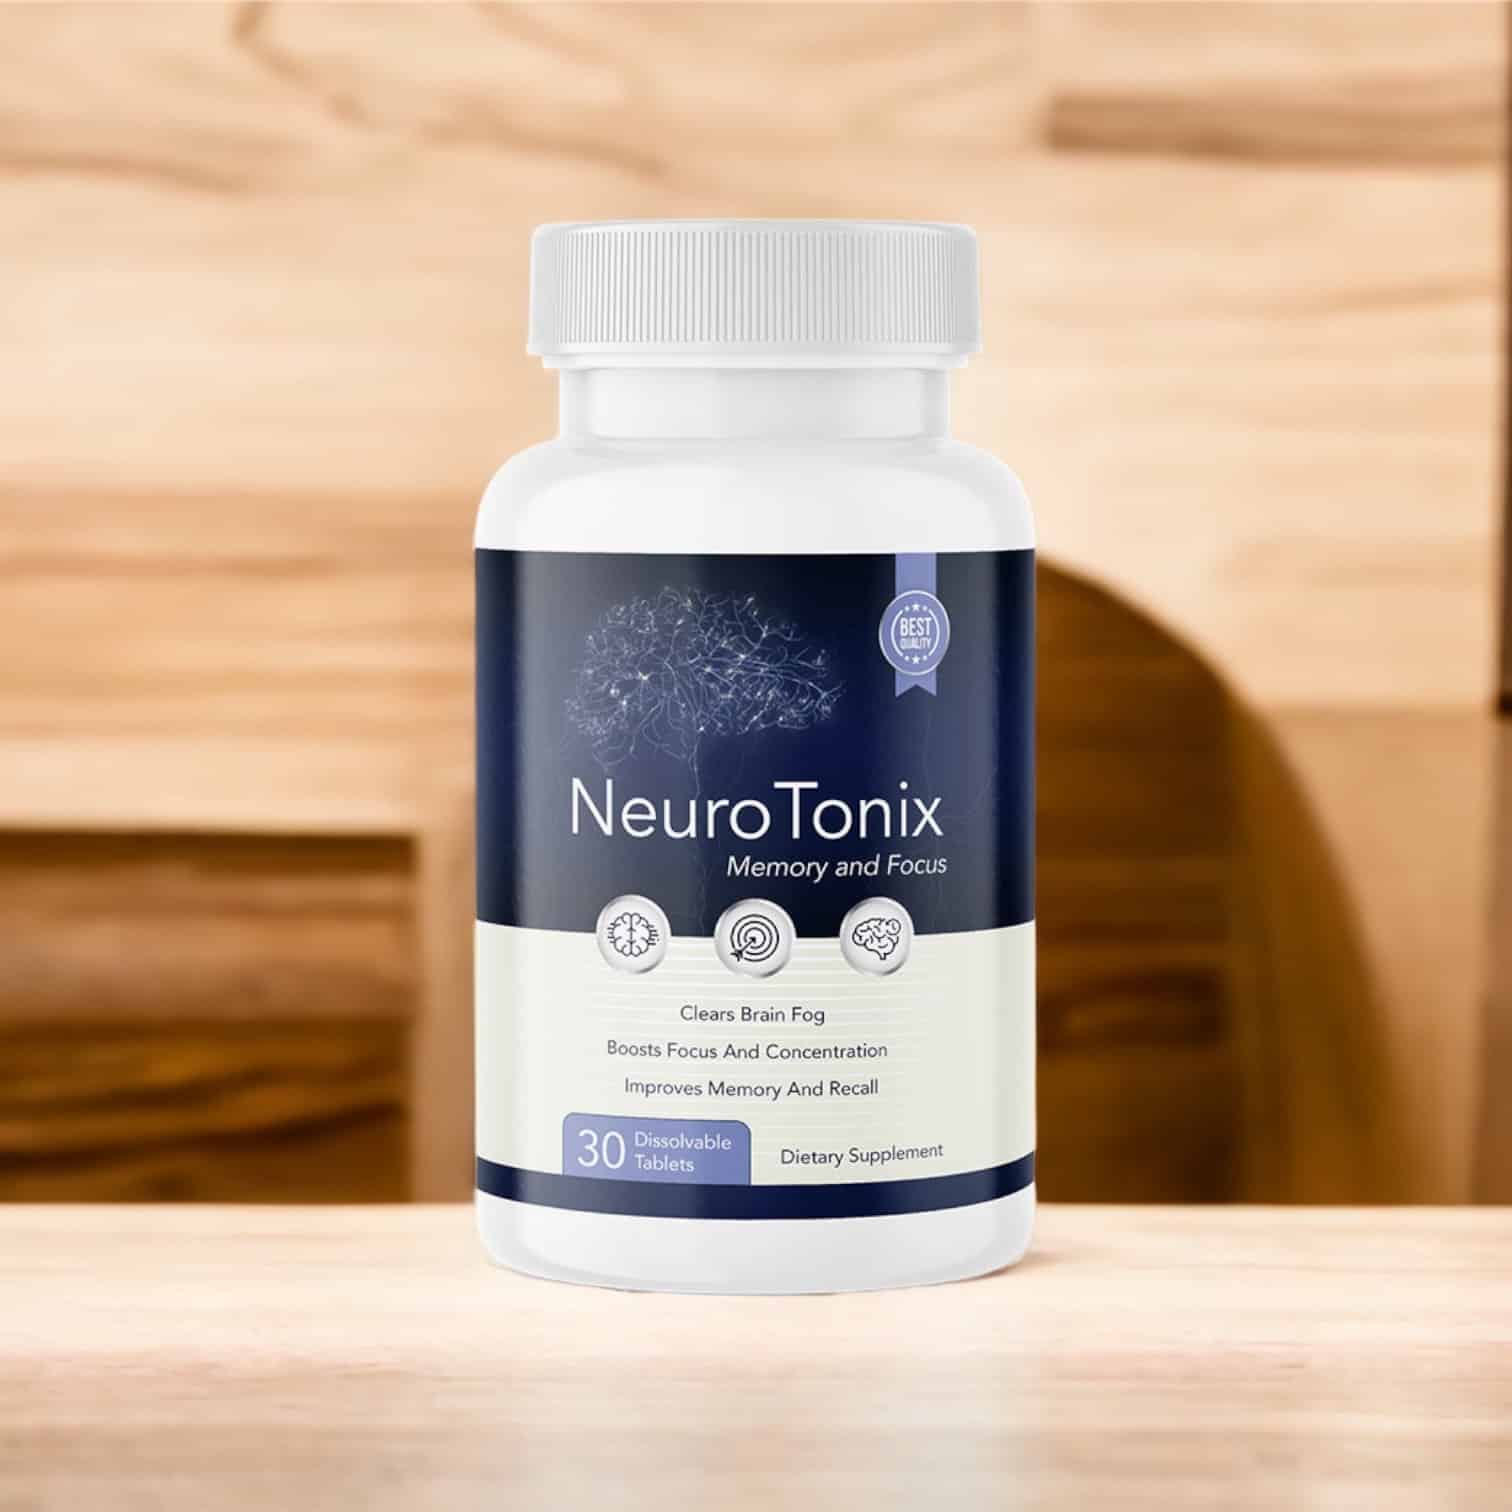 NeuroTonix Nootropic Review